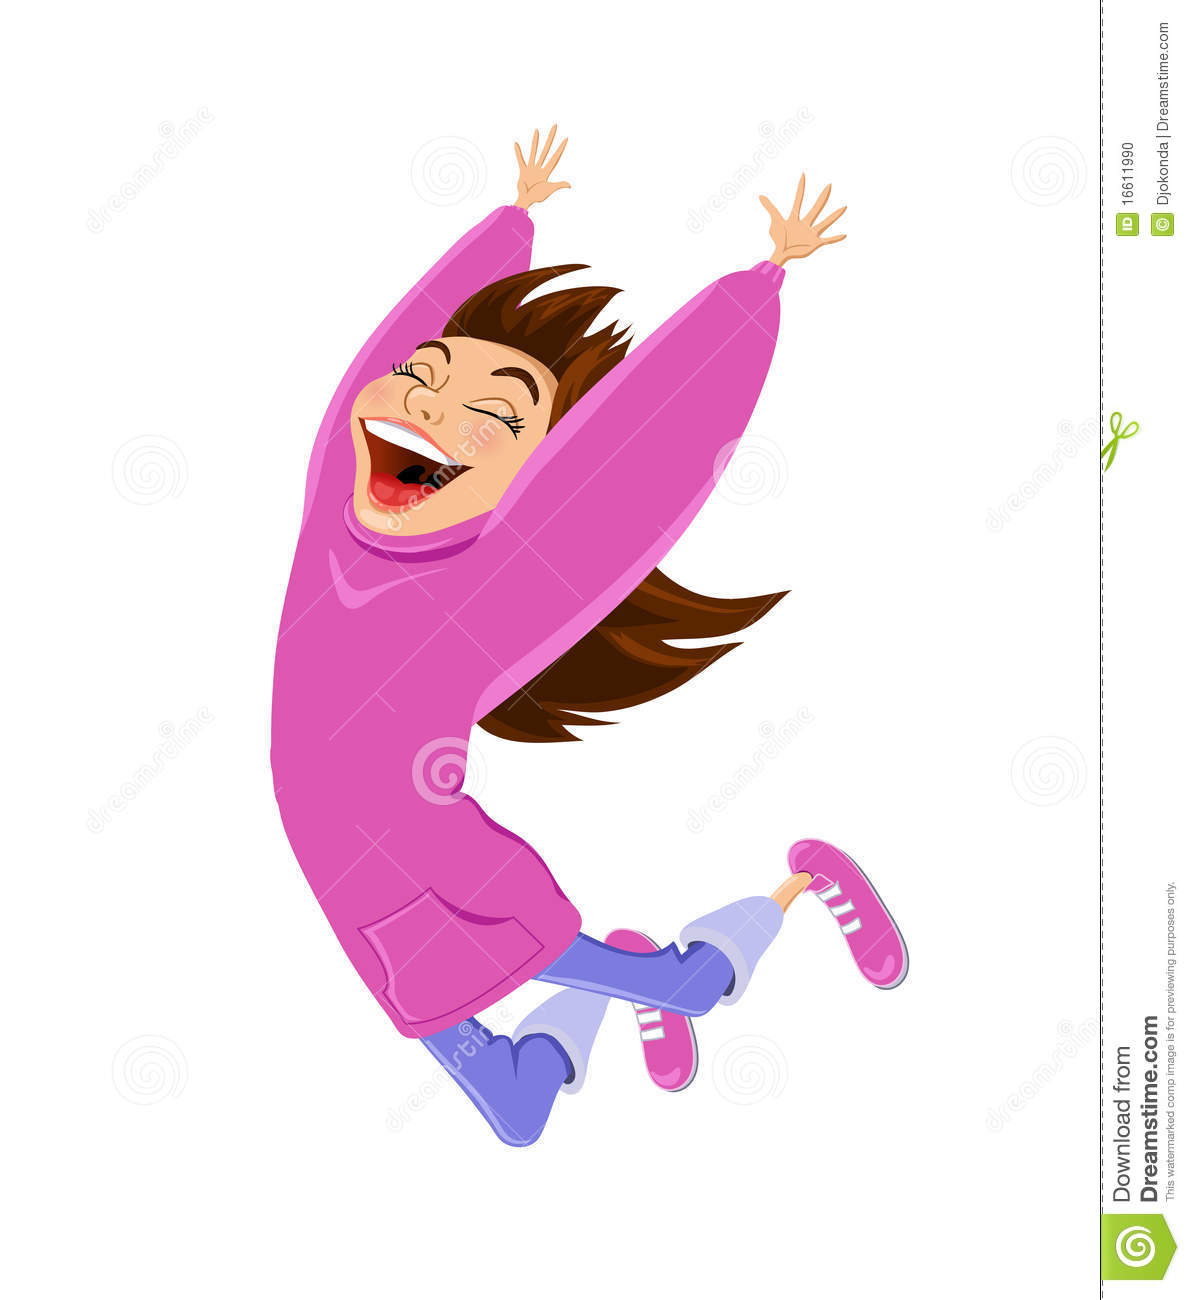 joy clipart jumping girl